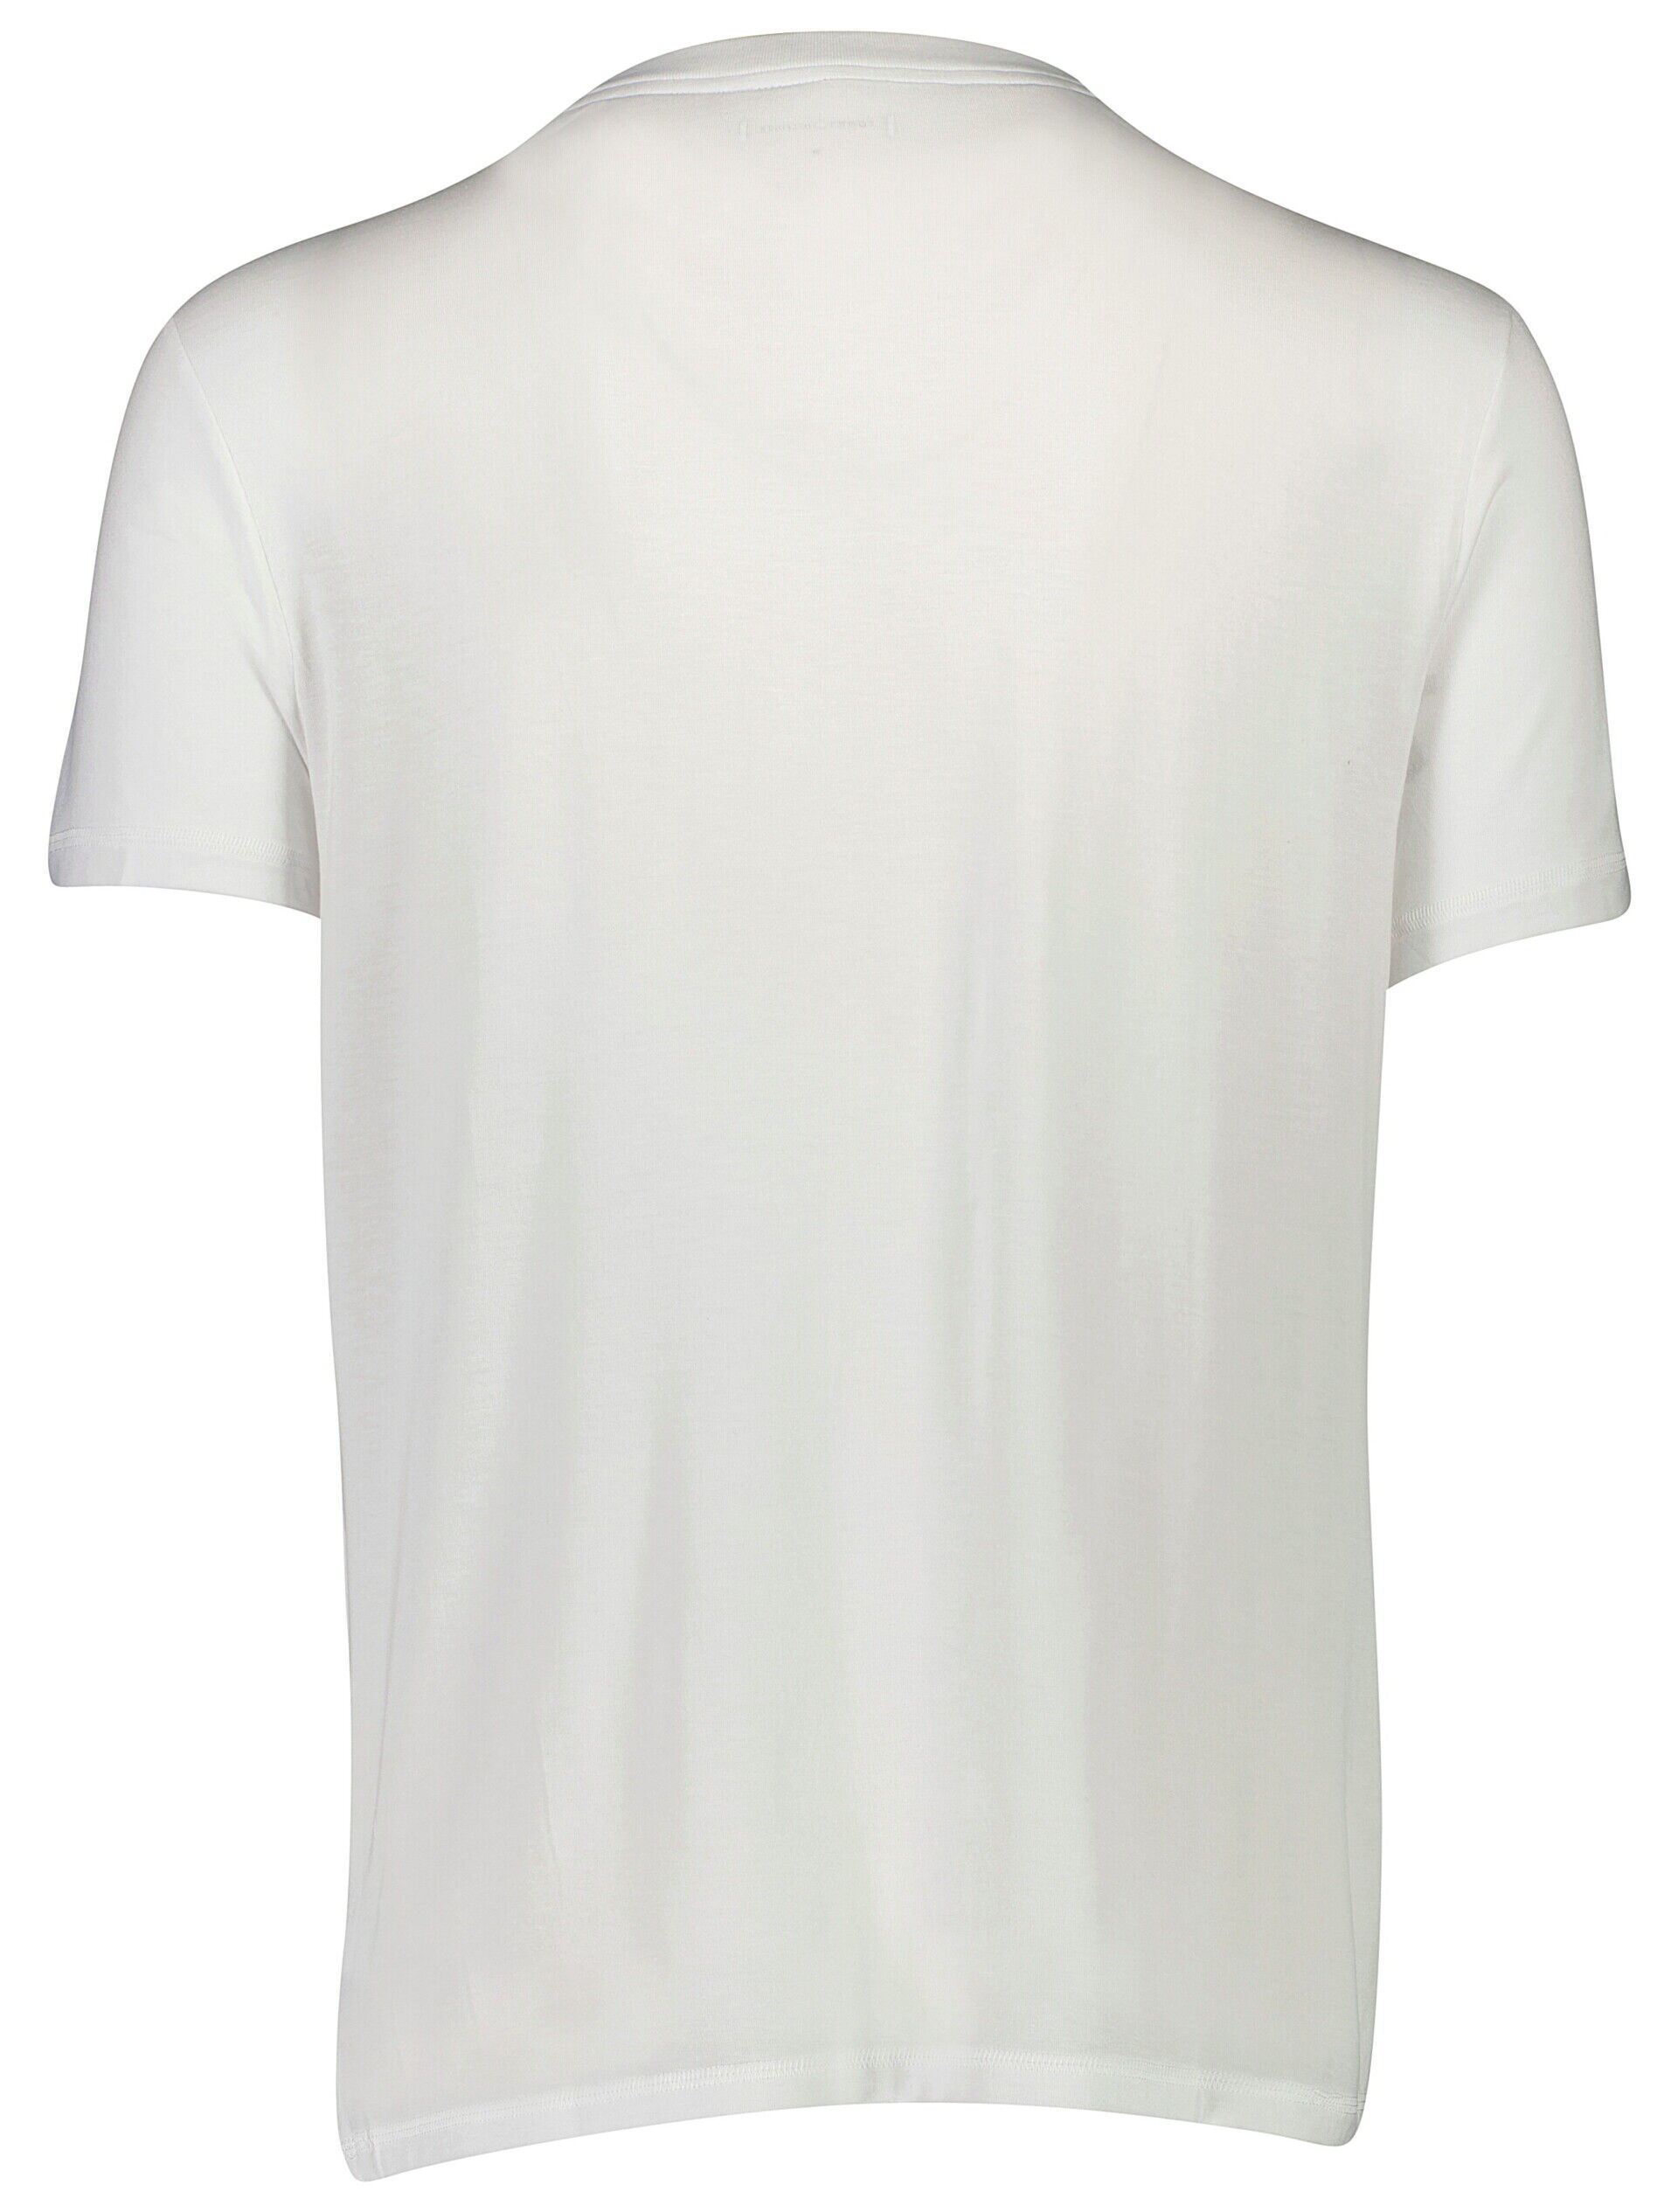 Tommy Hilfiger  T-shirt 90-400905